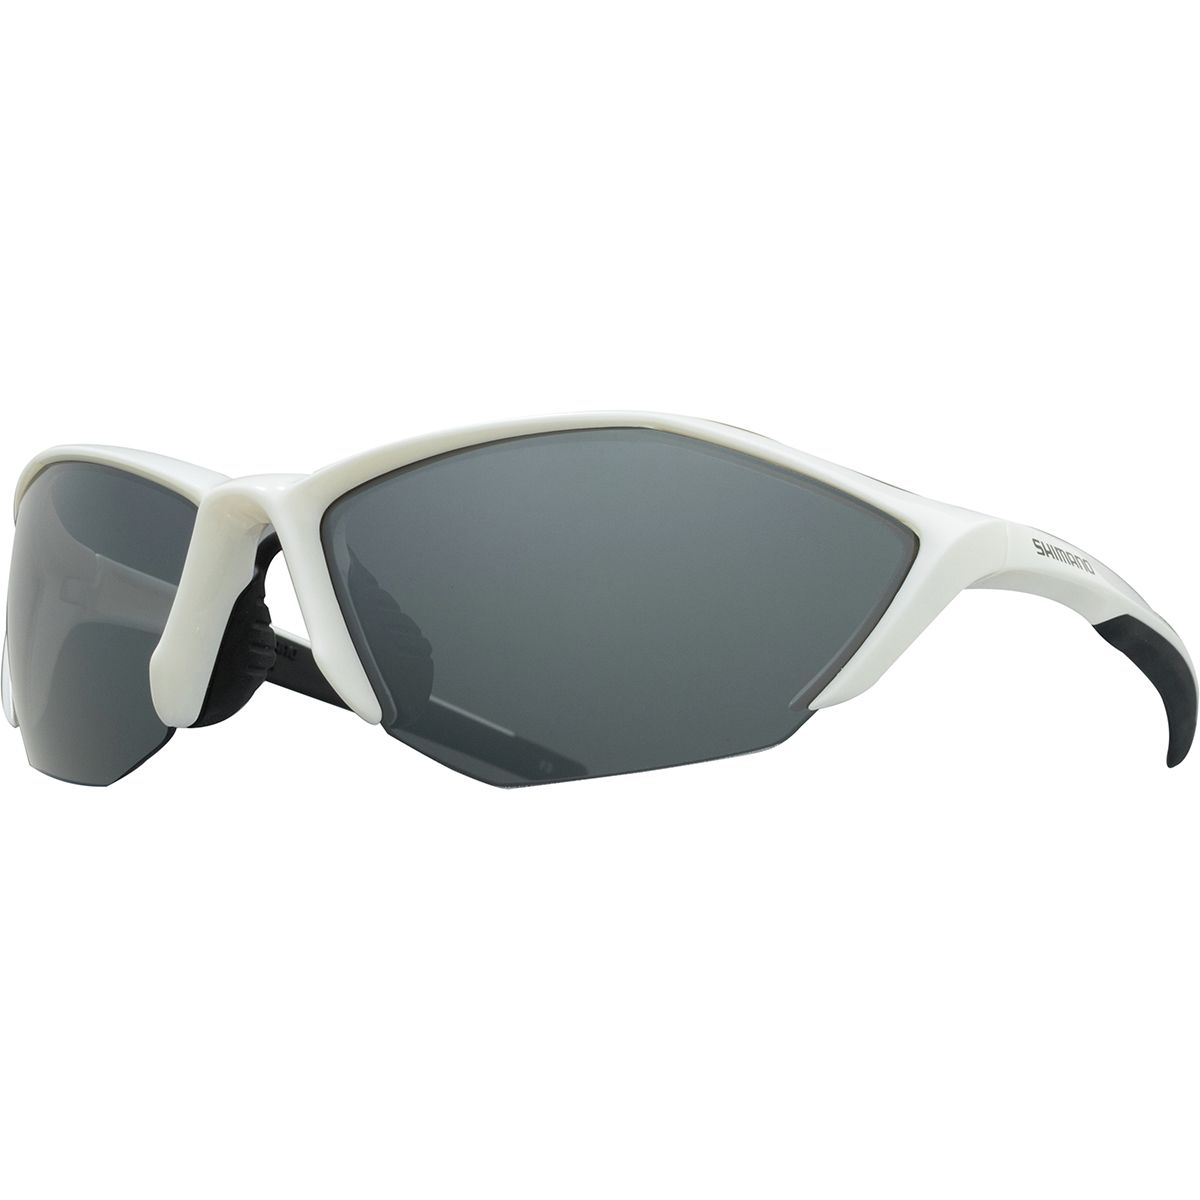 Shimano CE-S61R Cycling Sunglasses - Men's